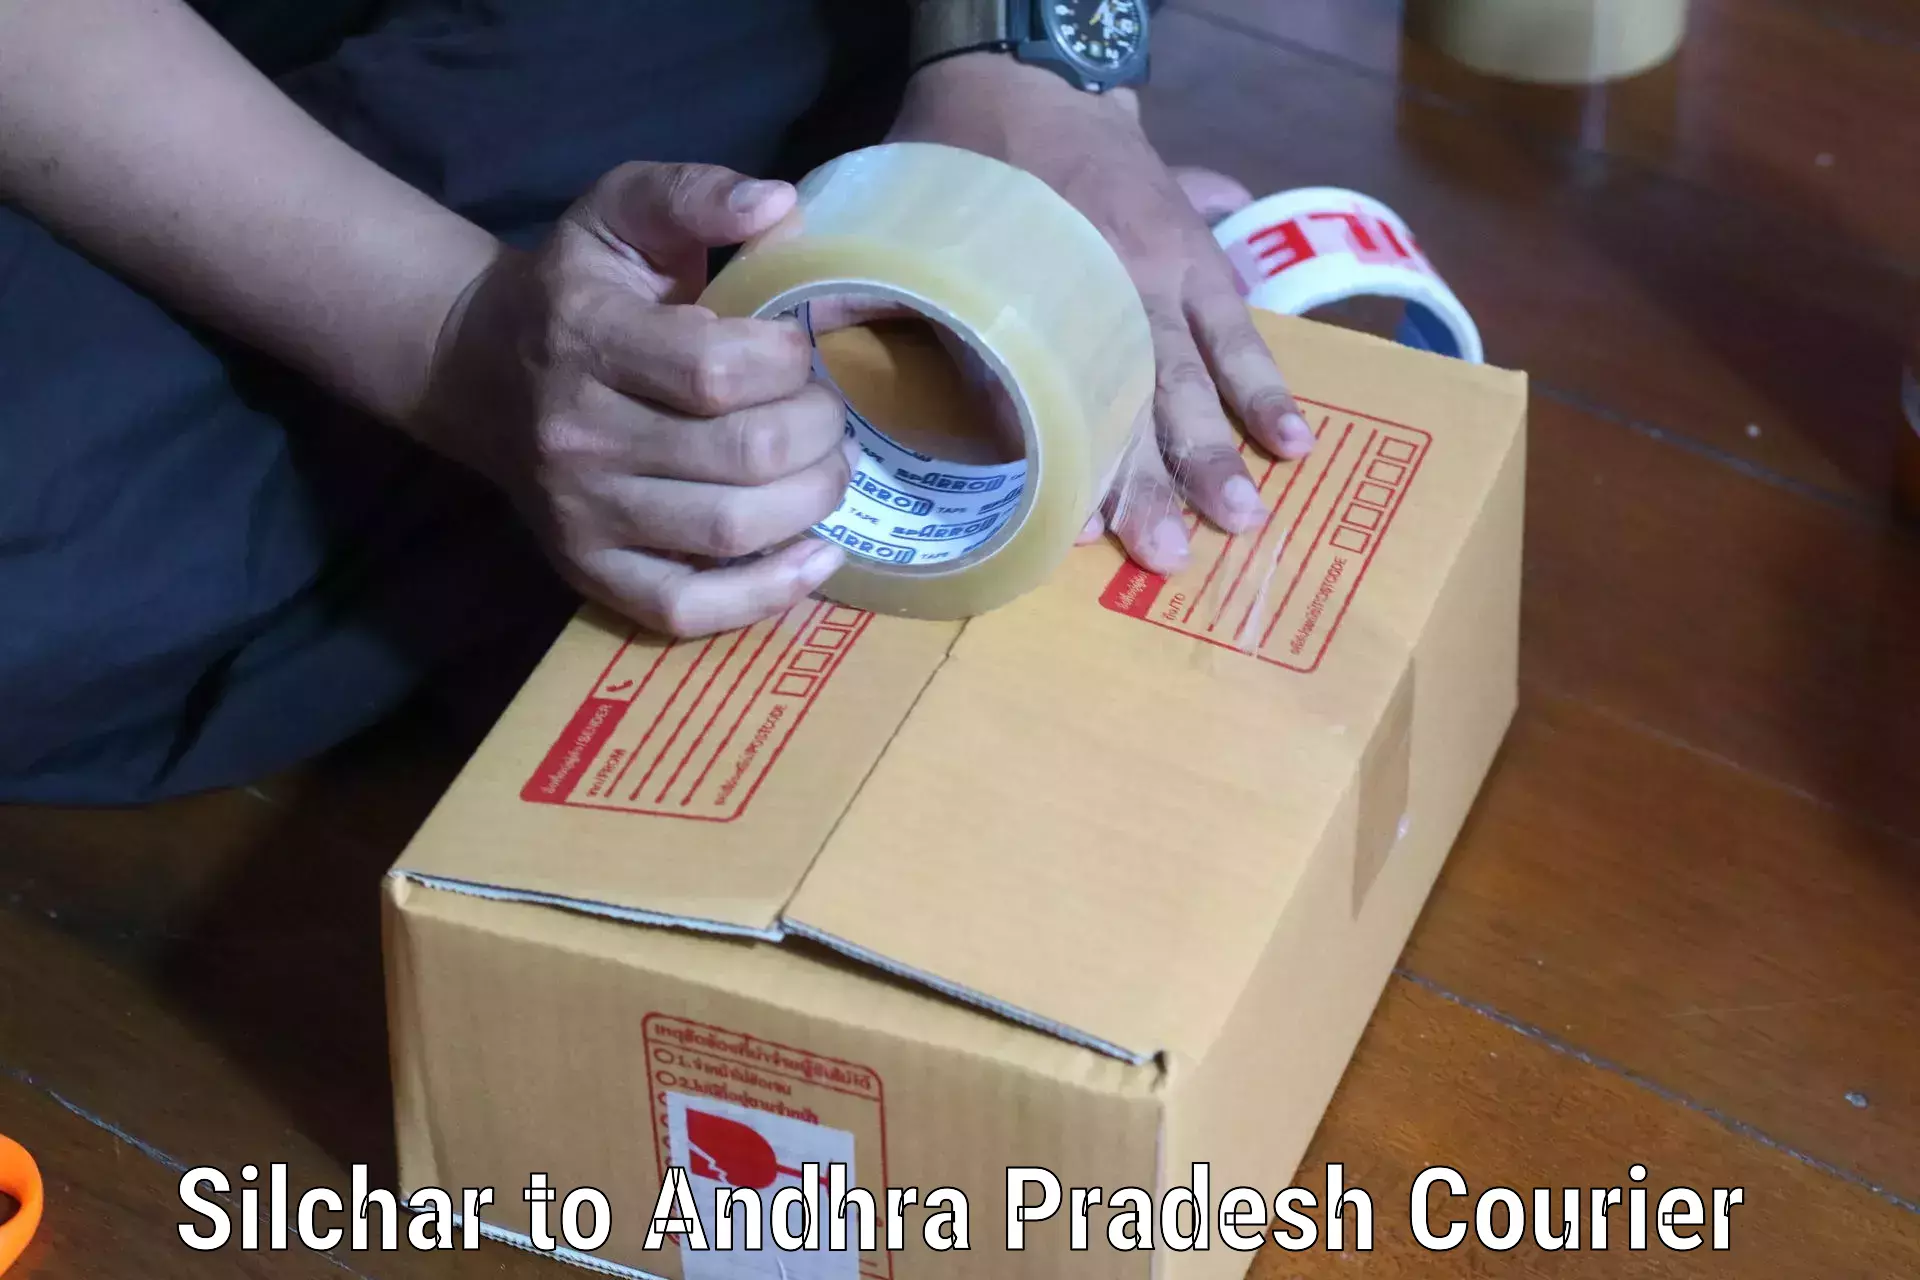 Cash on delivery service Silchar to Guntakal